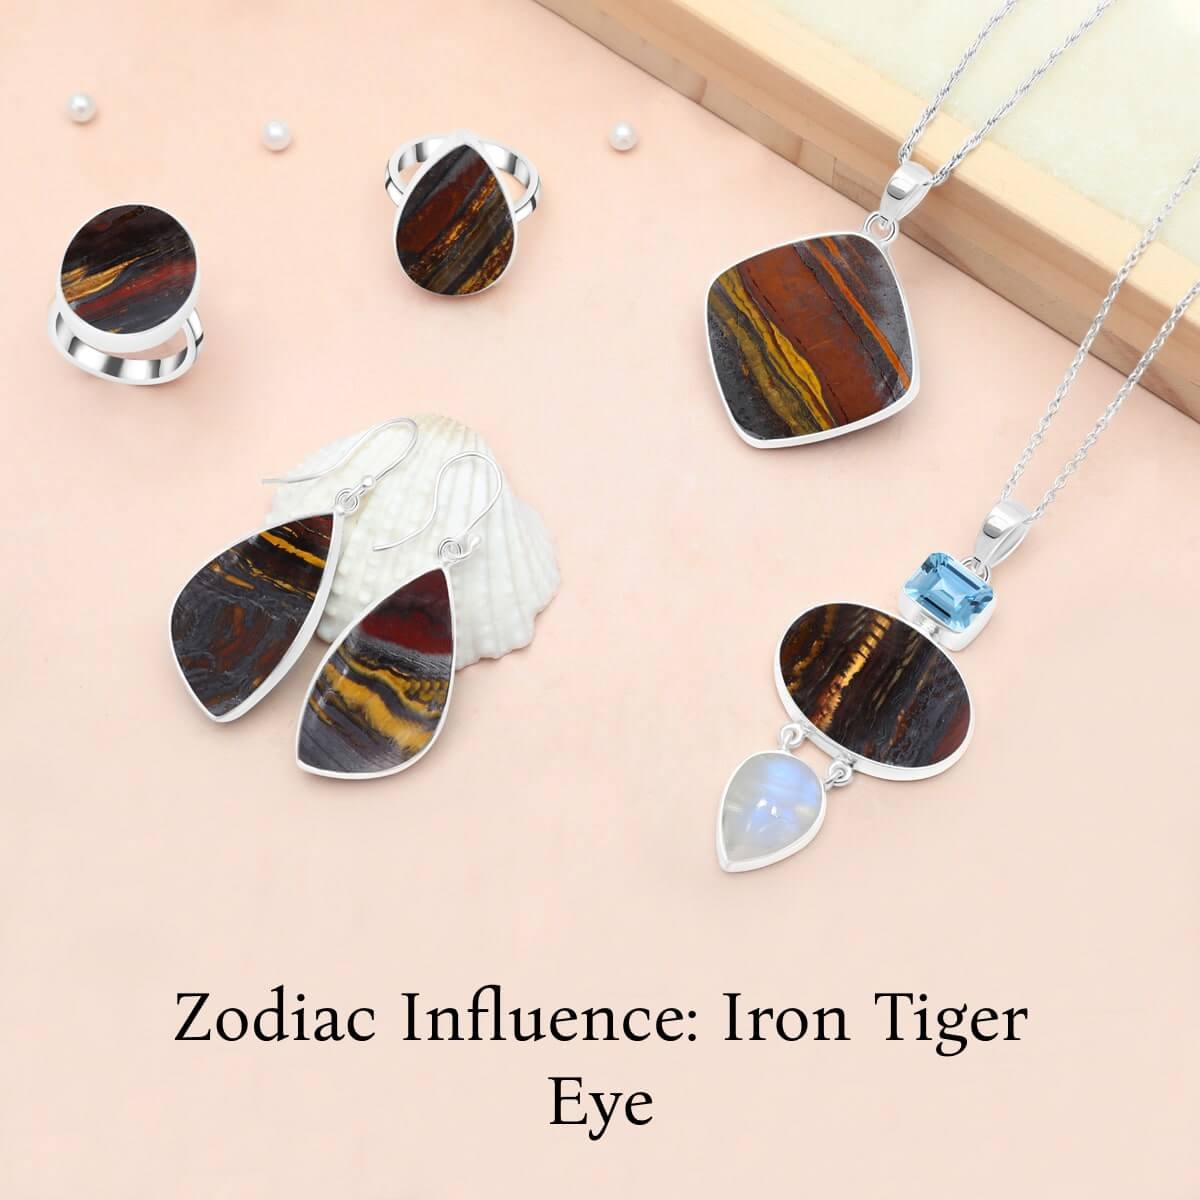 Iron Tiger Eye Zodiac Sign